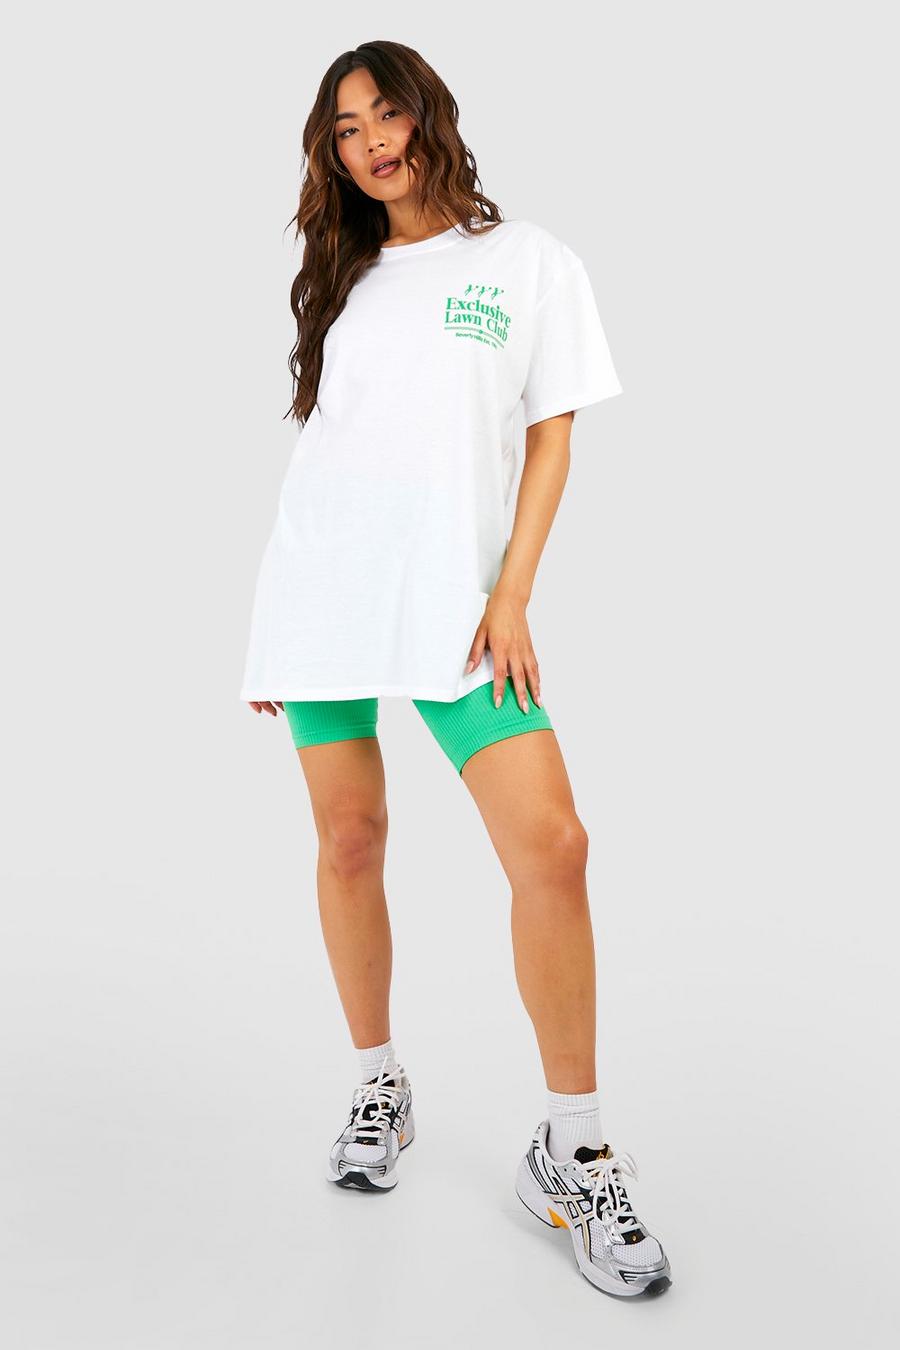 White Oversized Lawn Club T-Shirt Met Borstopdruk image number 1